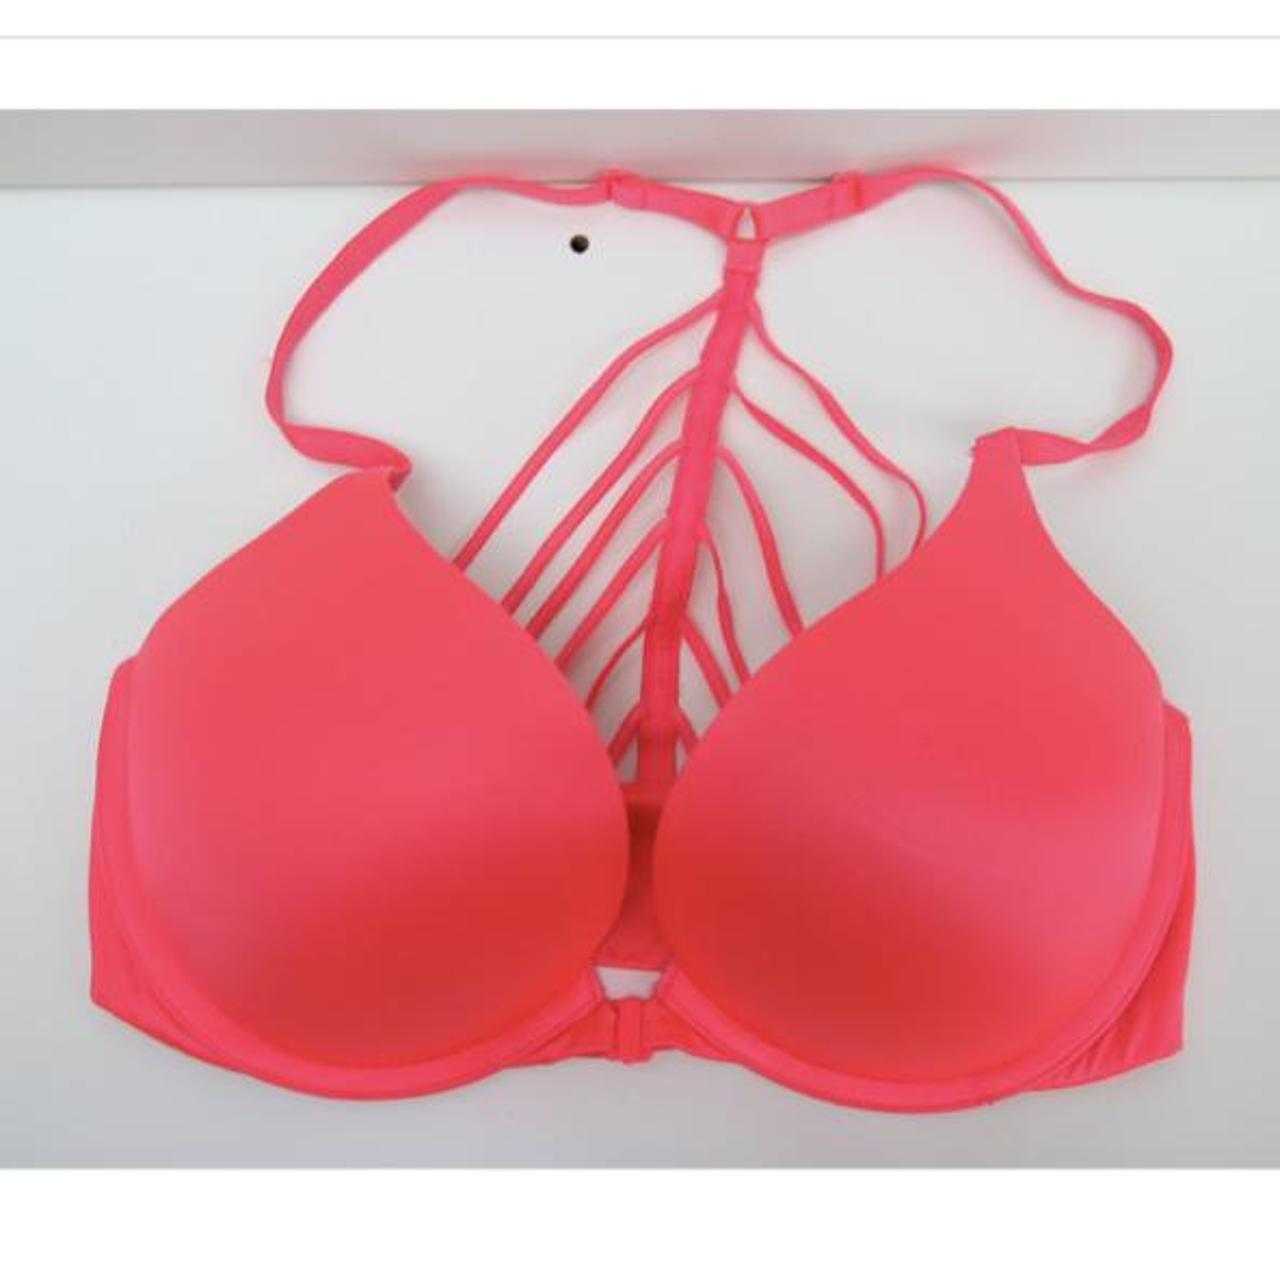 VS Victoria’s Secret bombshell bra size 32D, Says